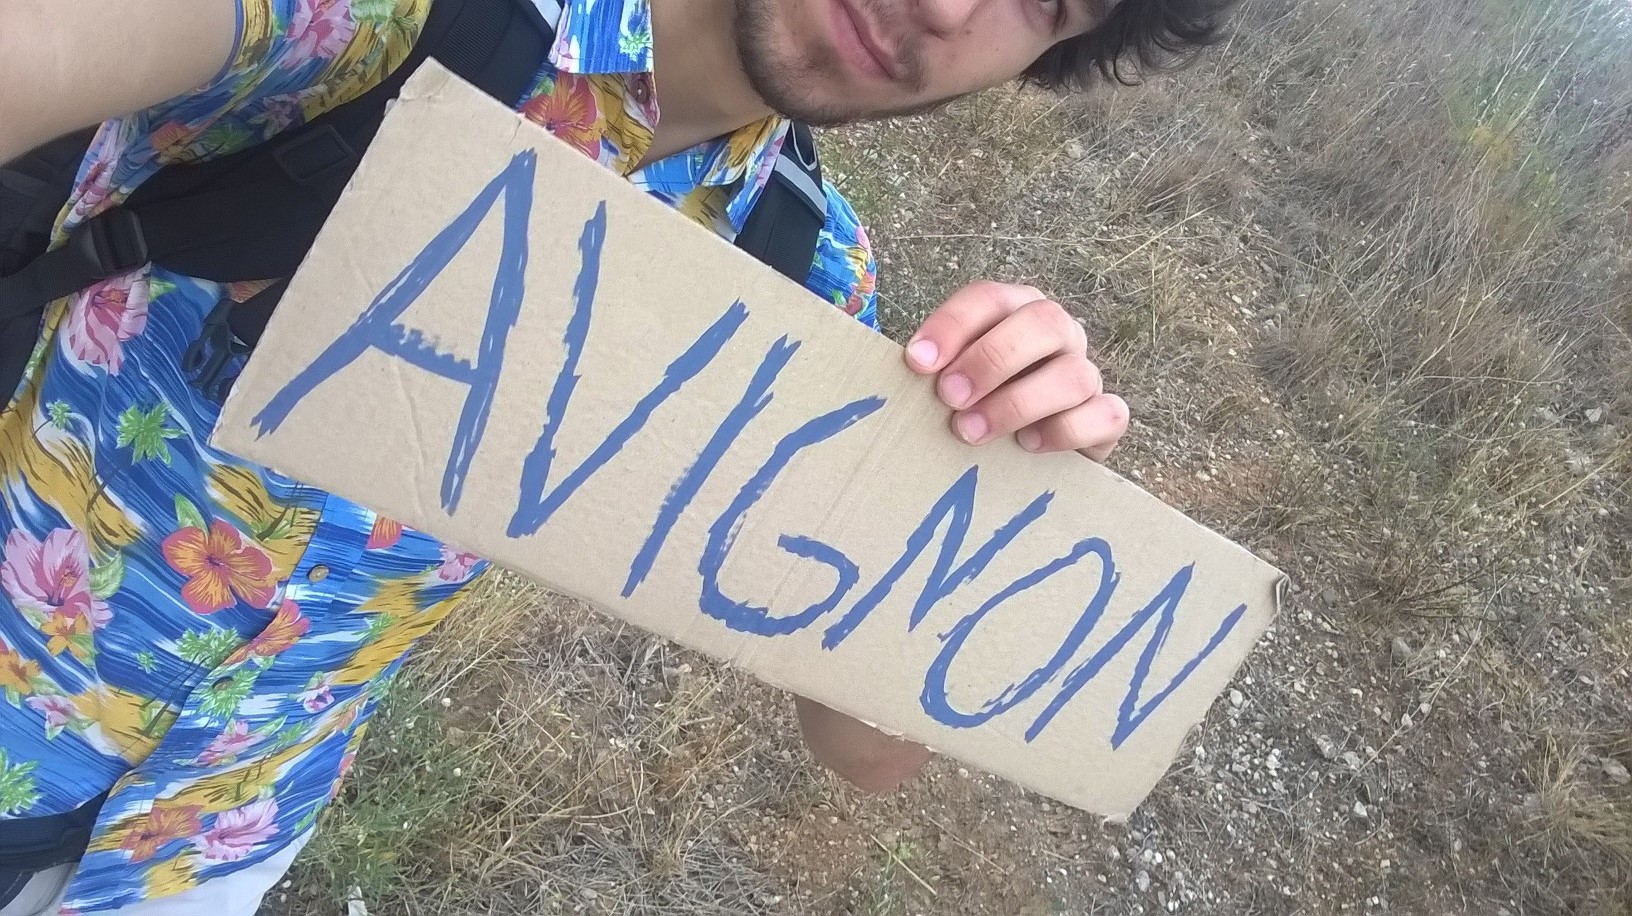 Awinion